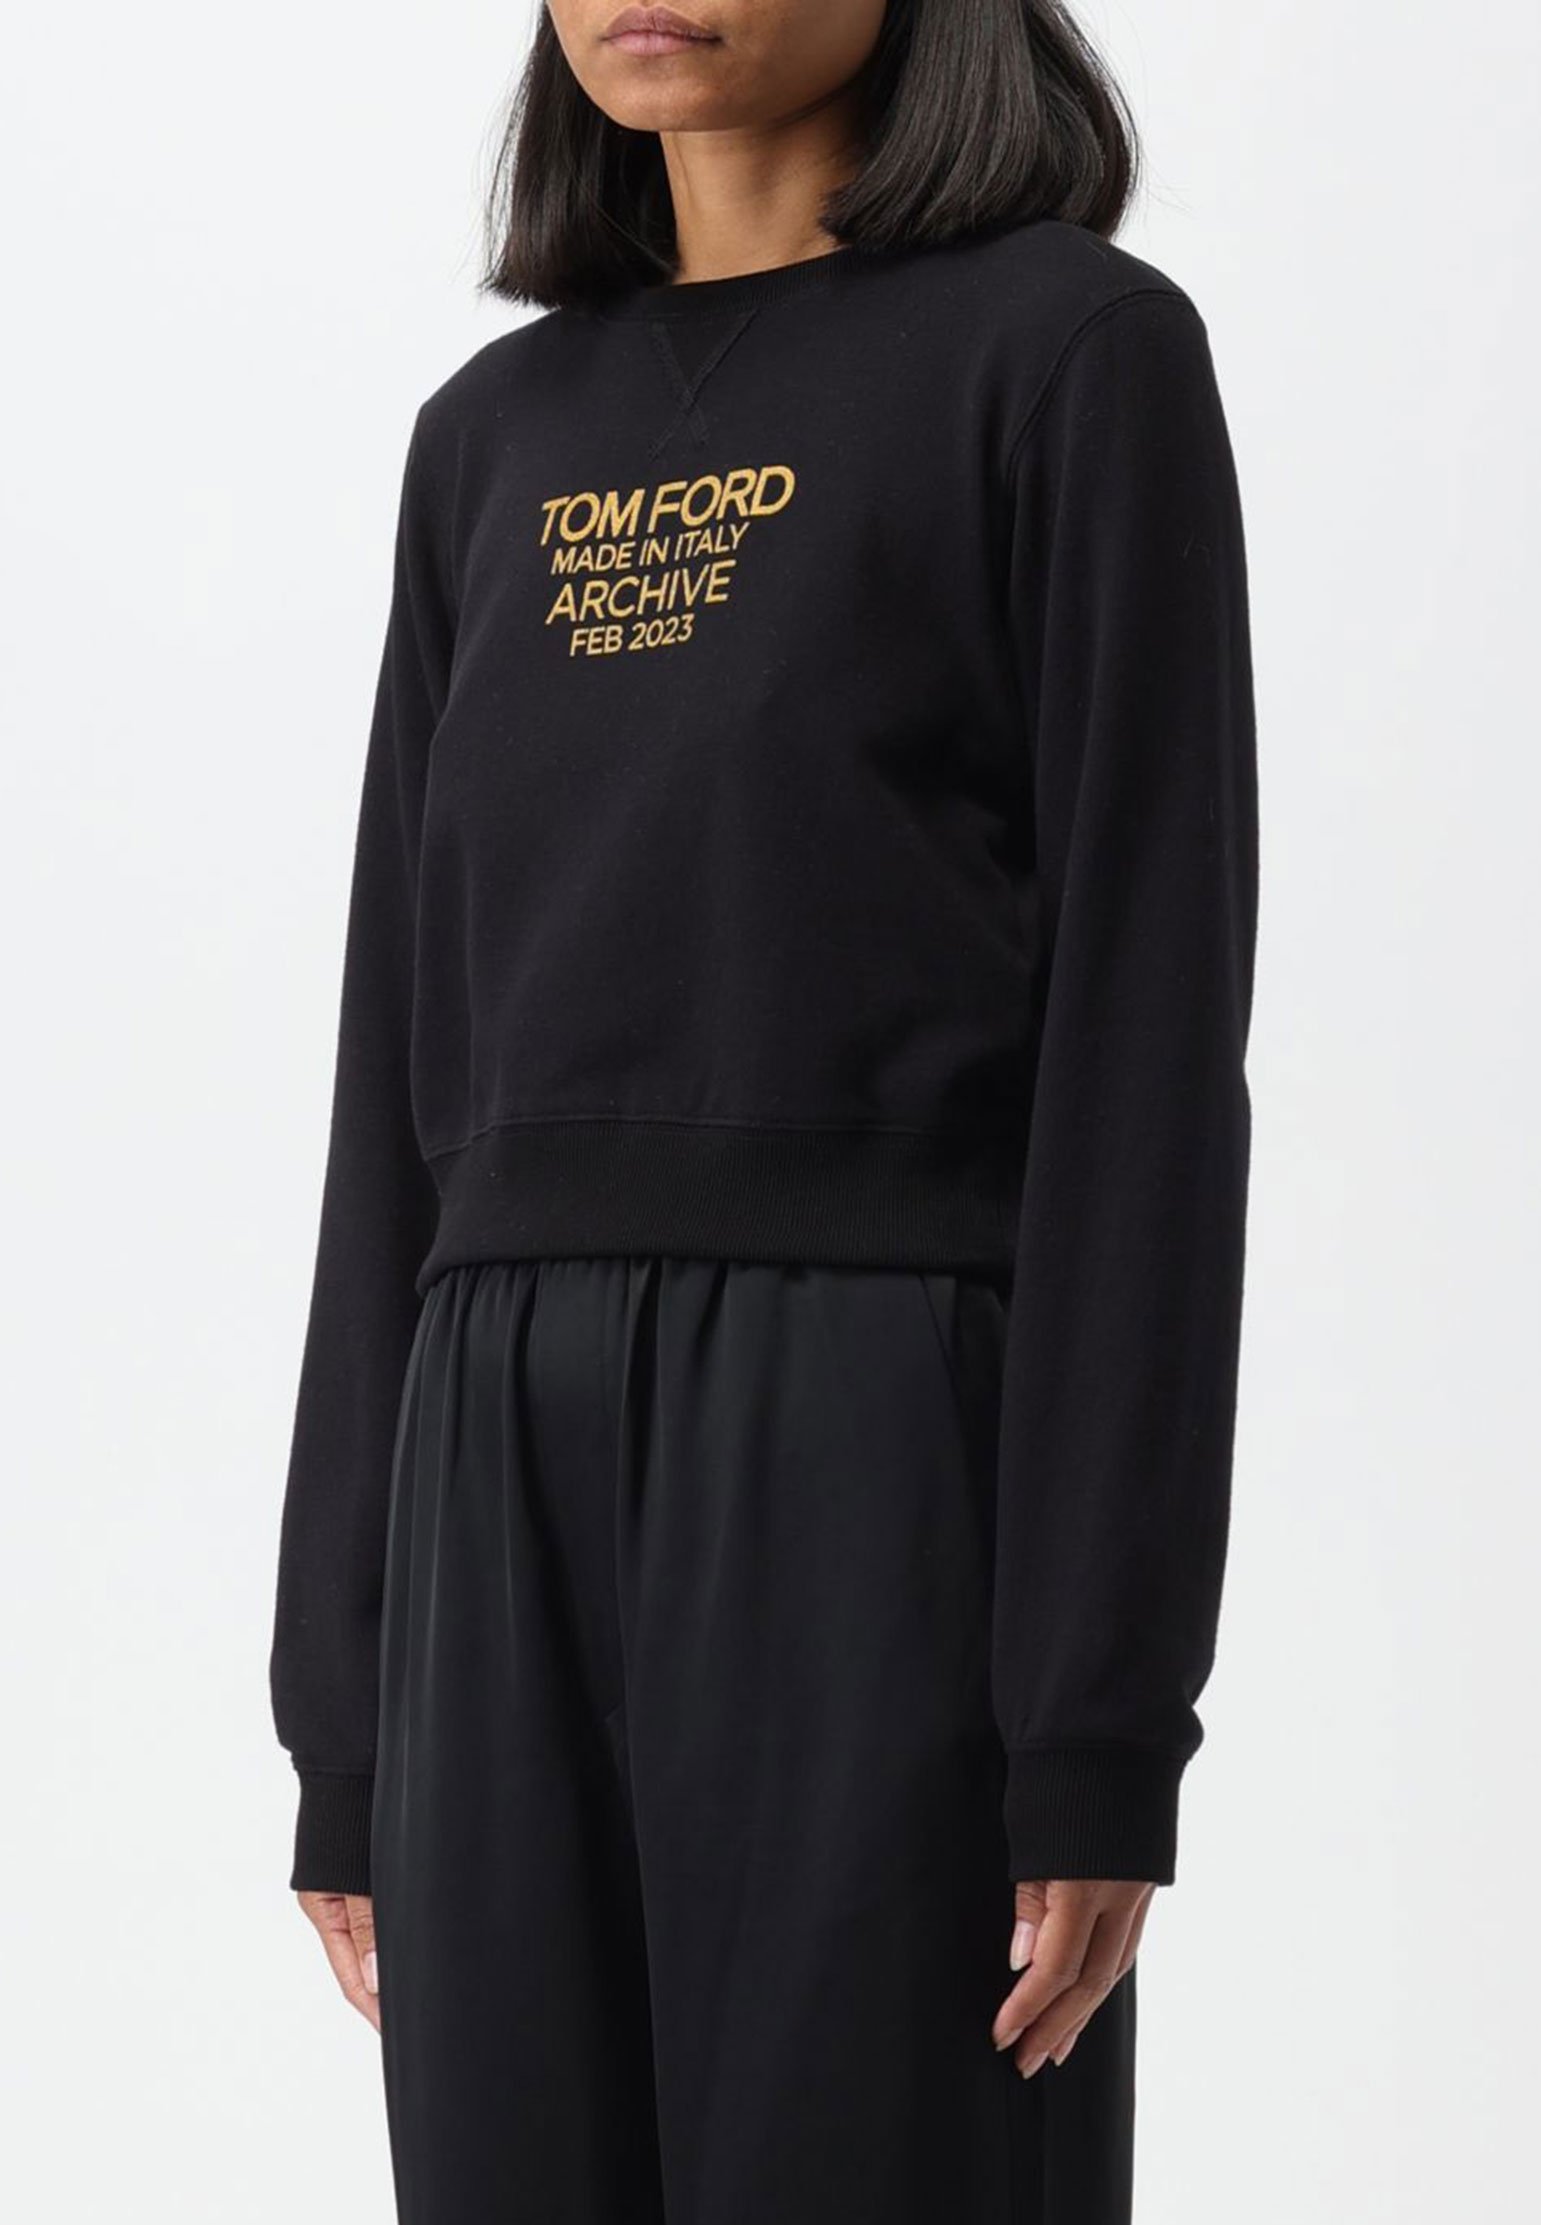 Sweatshirt TOM FORD Color: black (Code: 2955) in online store Allure